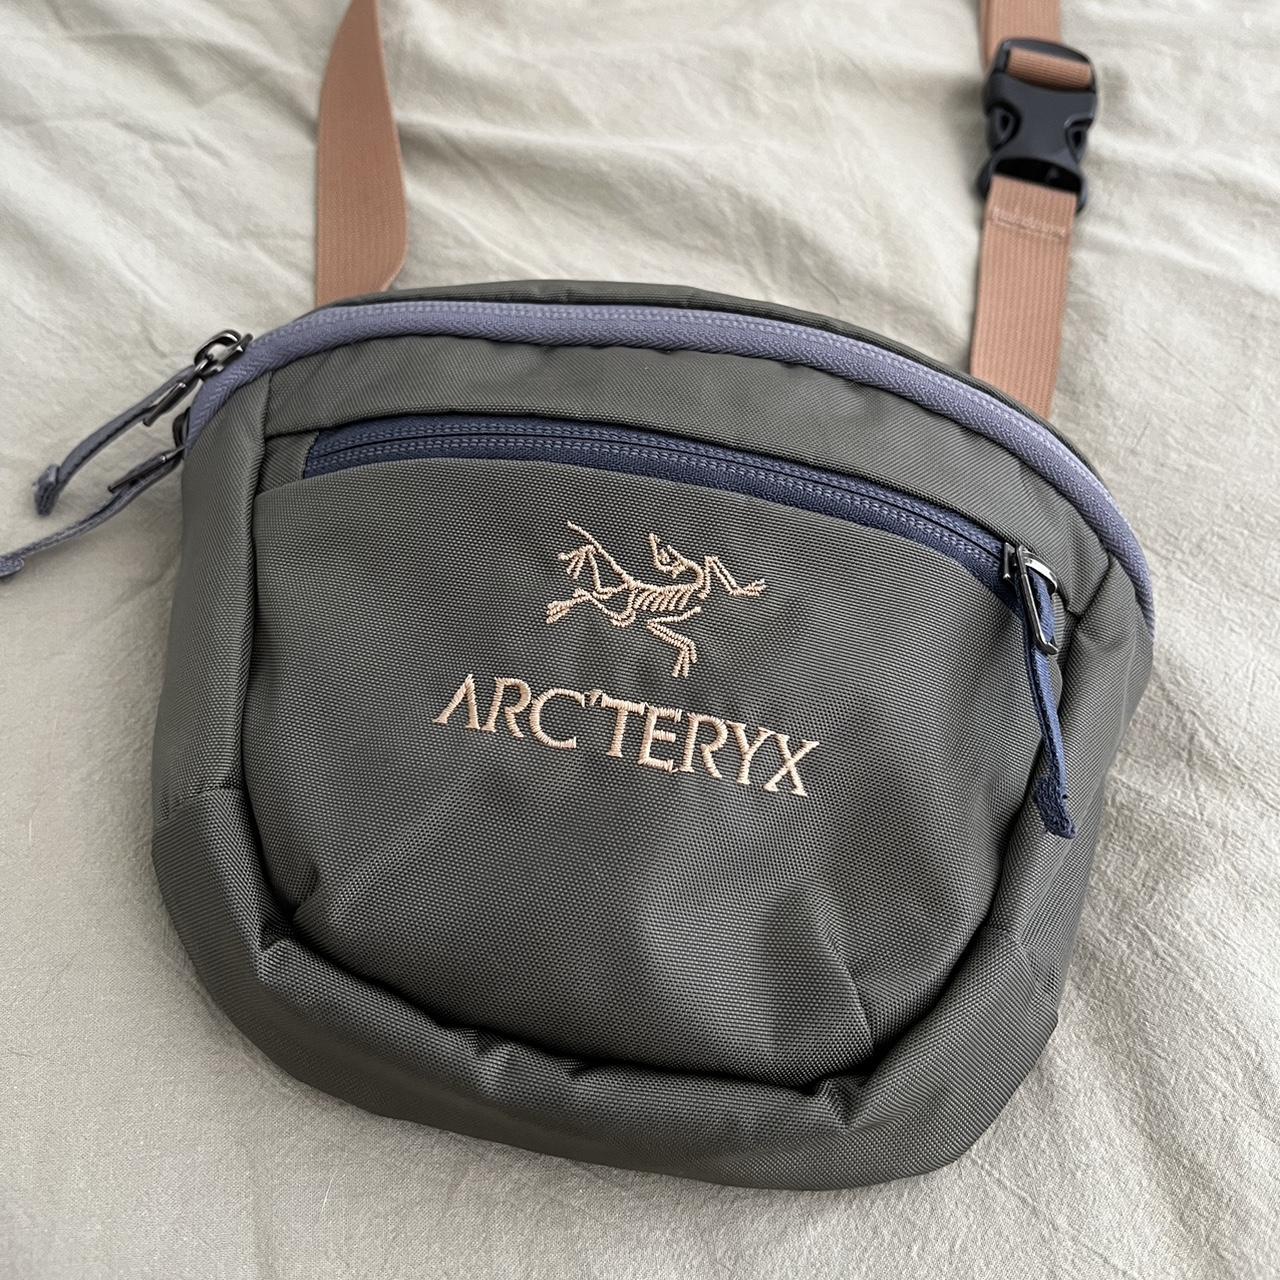 Arc’teryx x BEAMS BOY - Mantis 1 waist pack